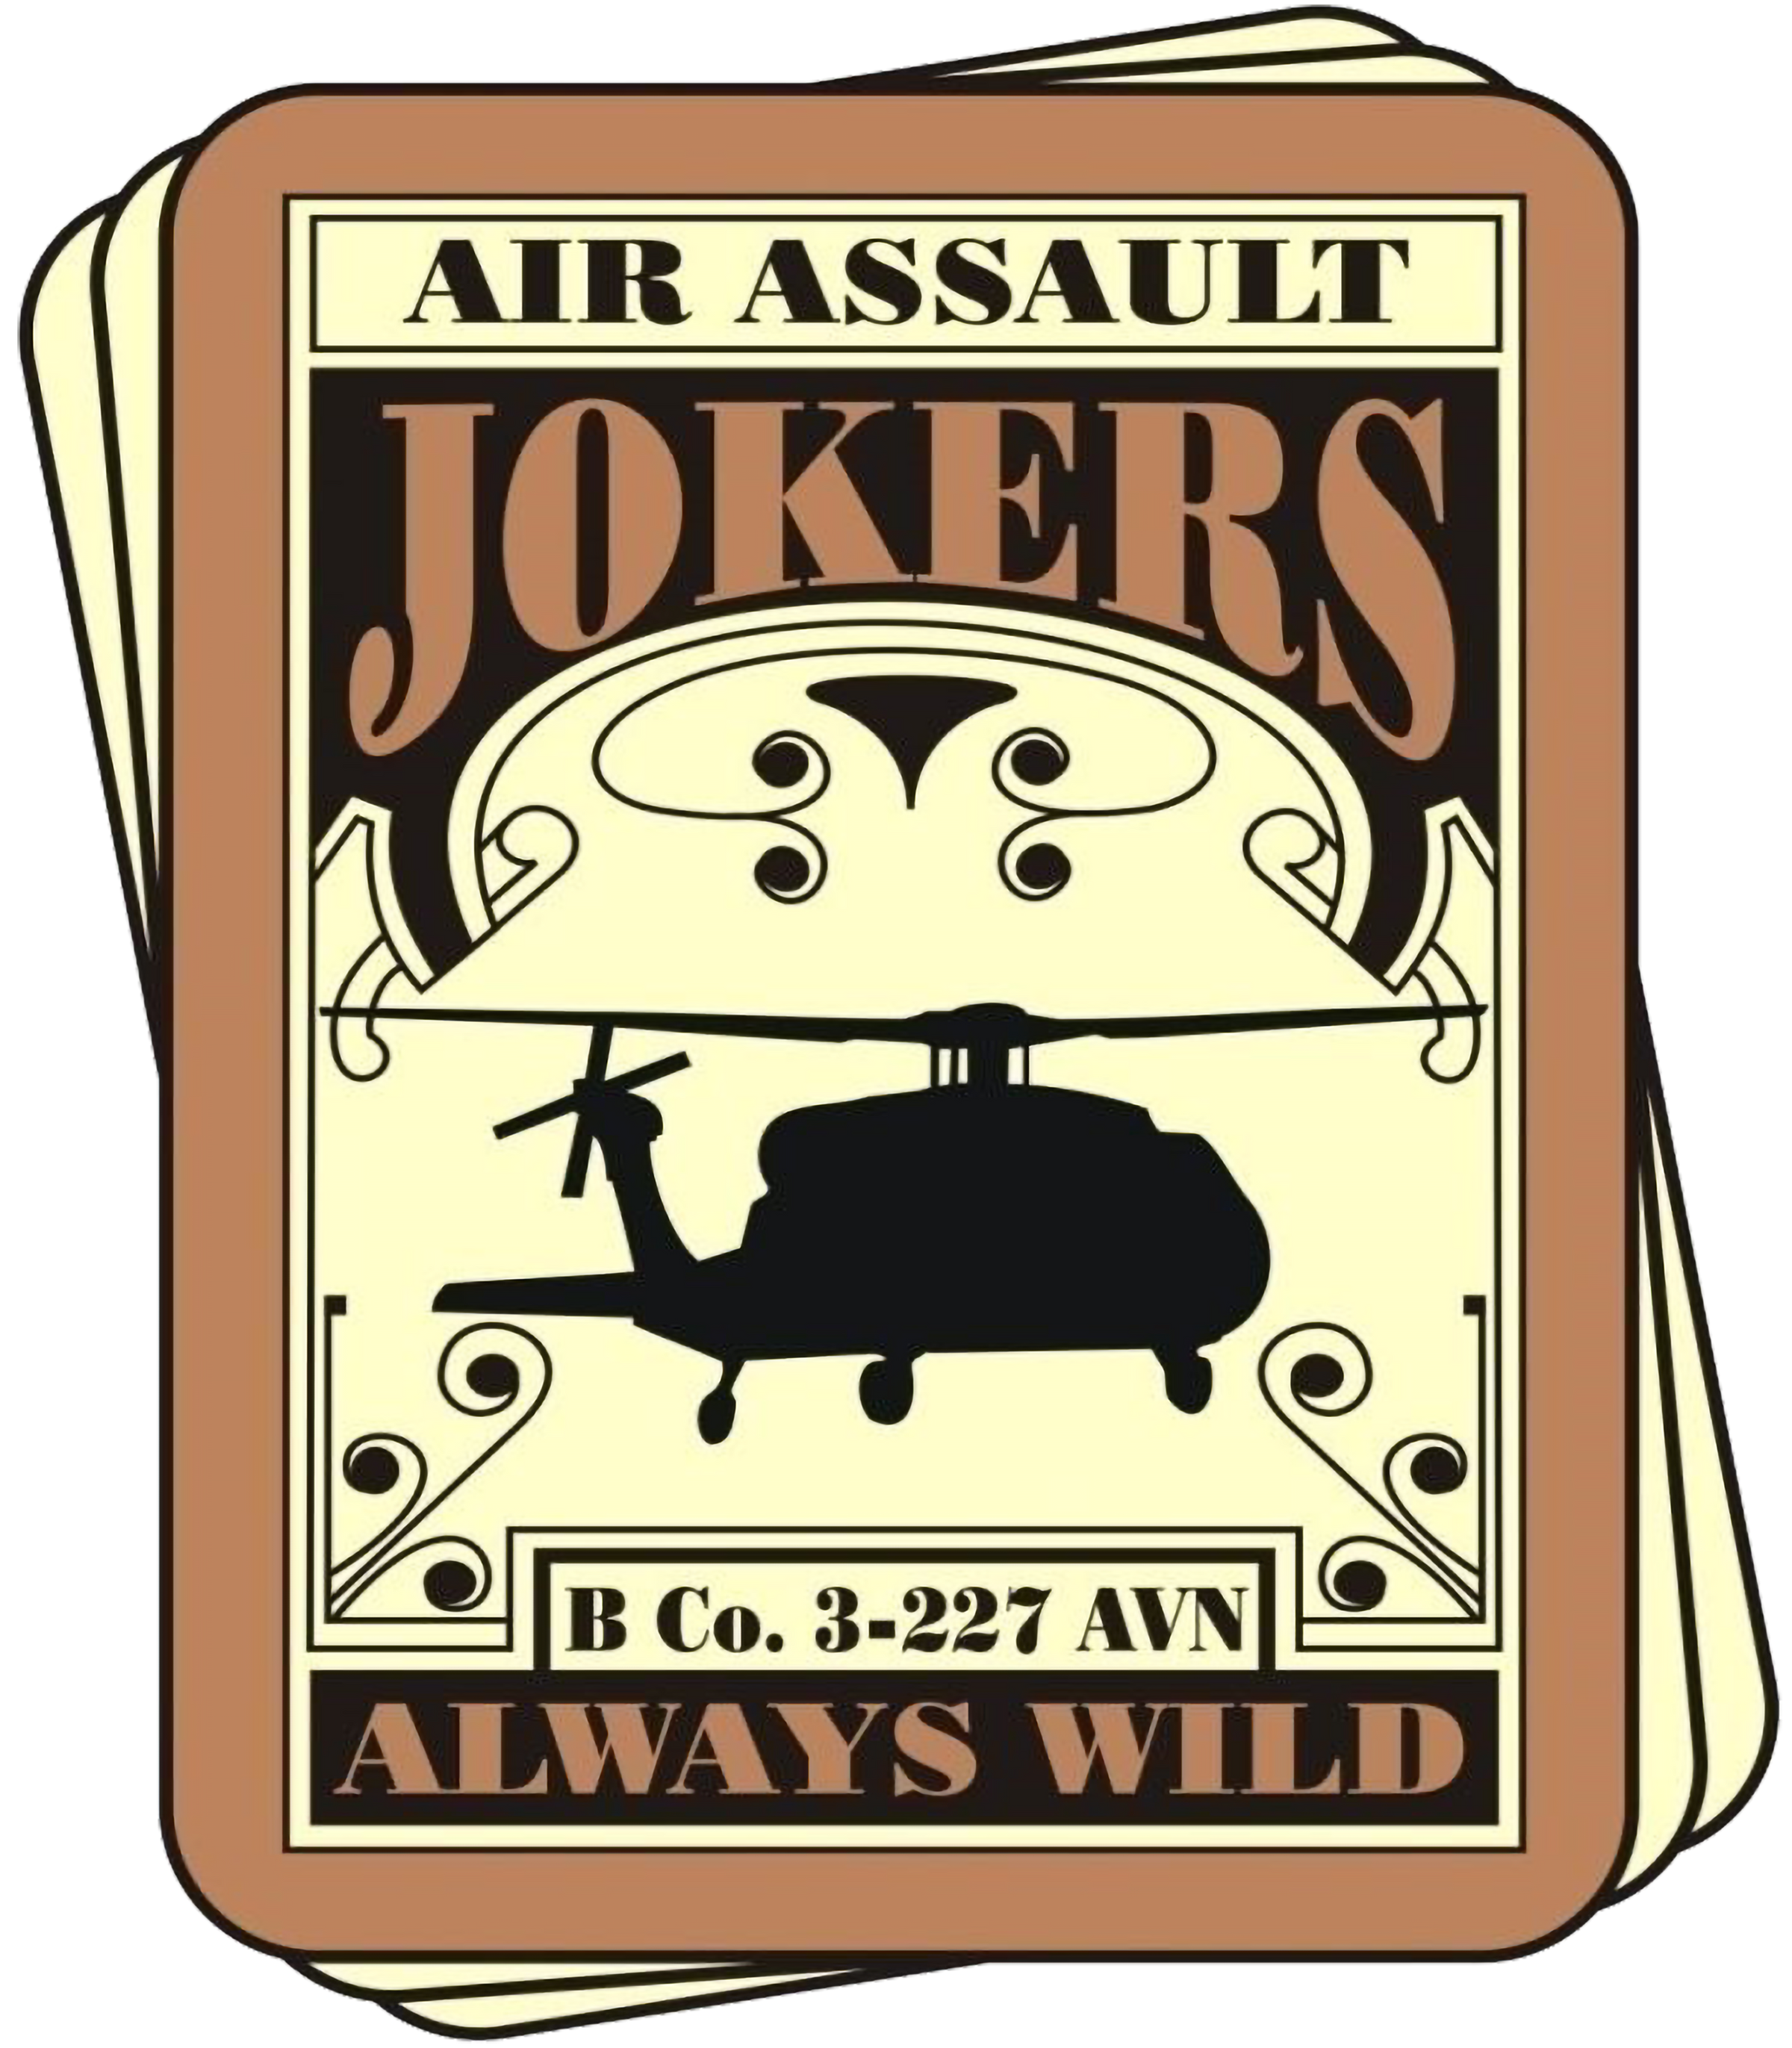 B Co, 3-227 AHB "Jokers"